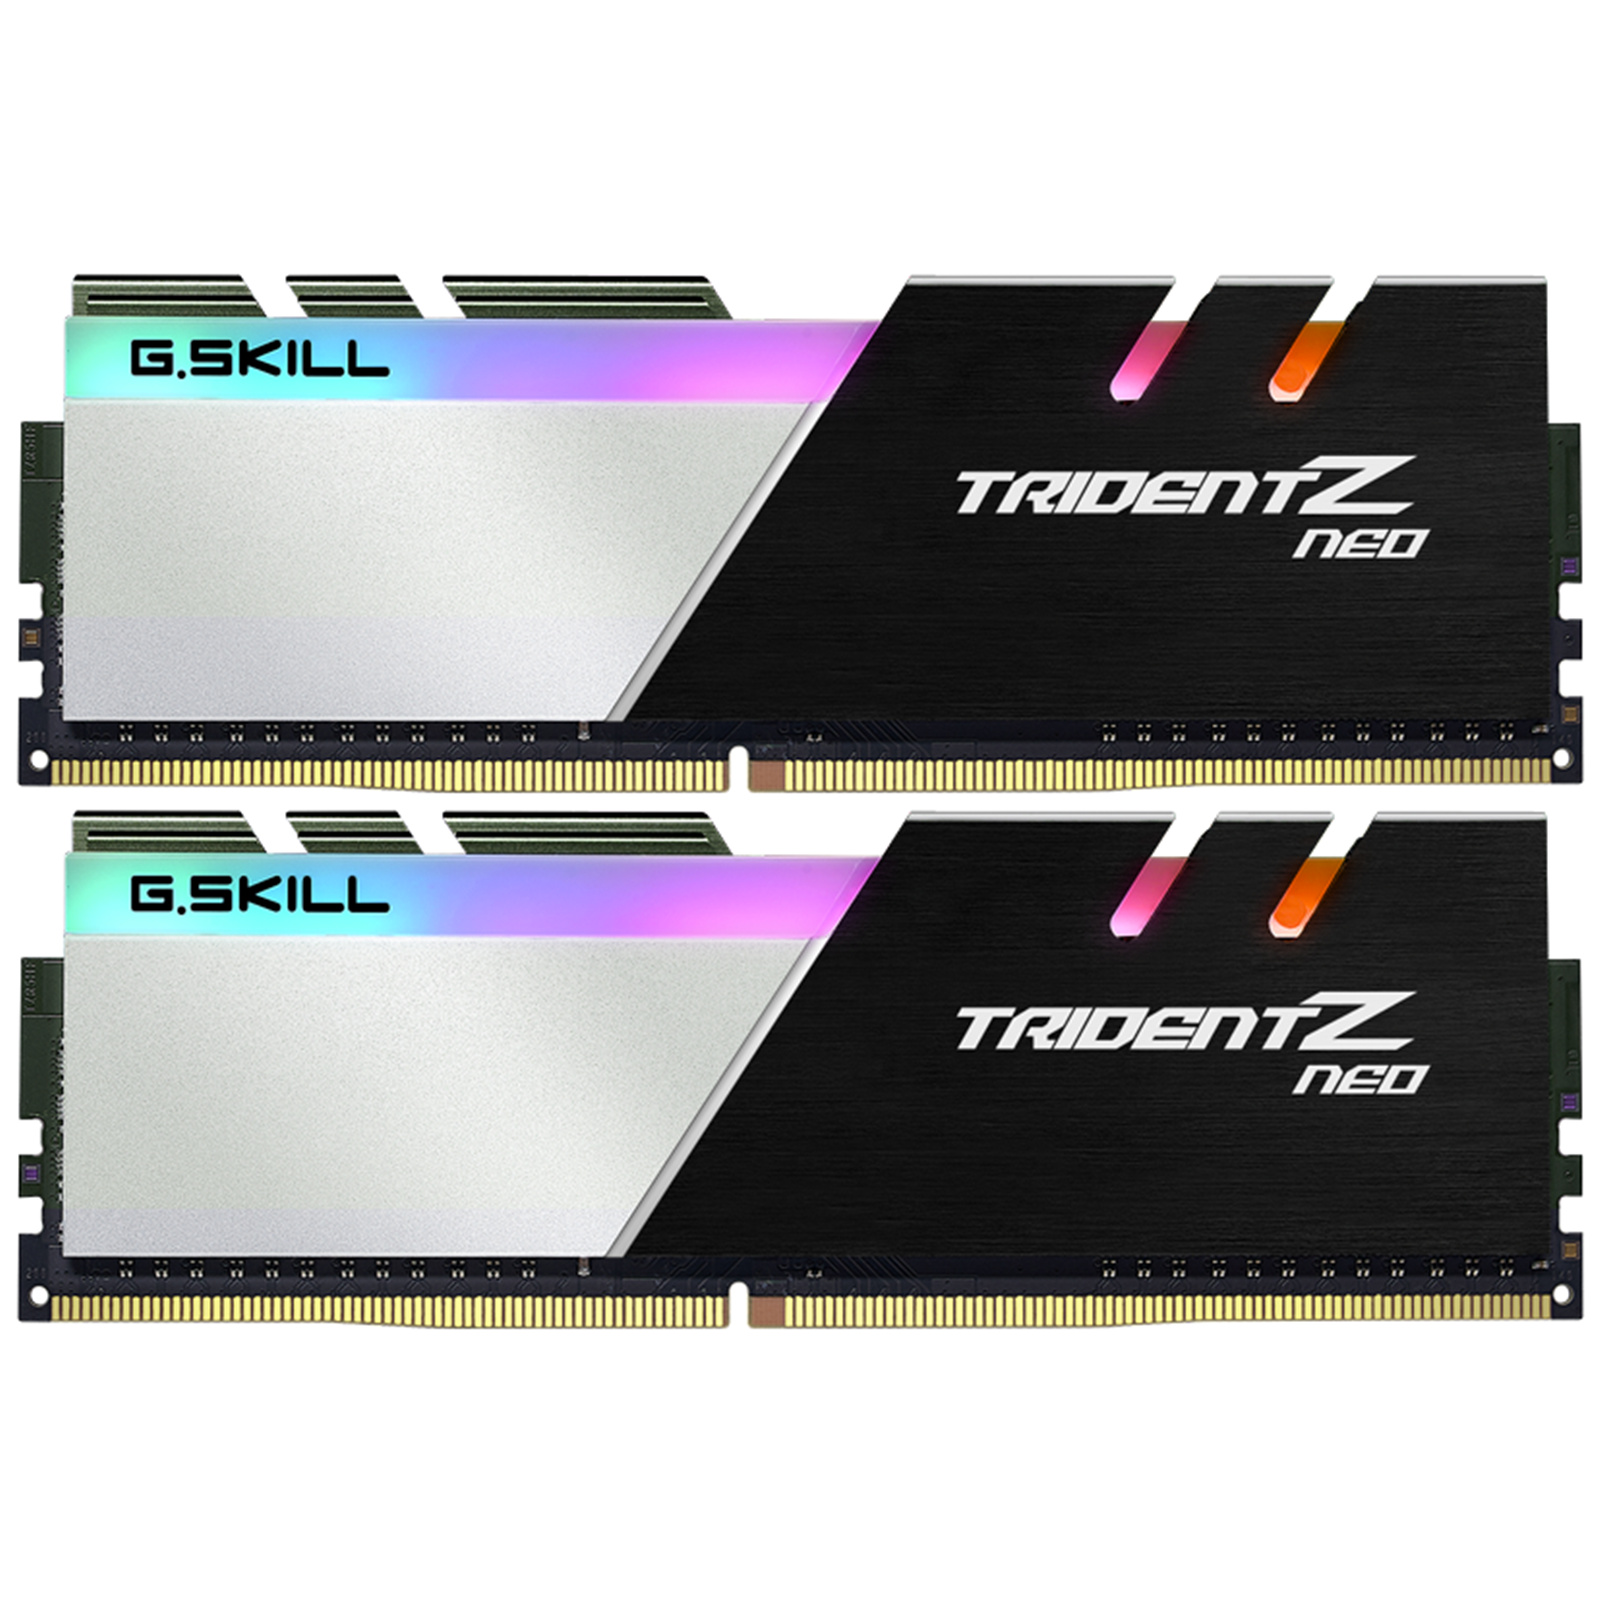 Buy the G.SKILL Trident Z Neo RGB F4-3600C18D-16GTZN 16 GB RAM (2X